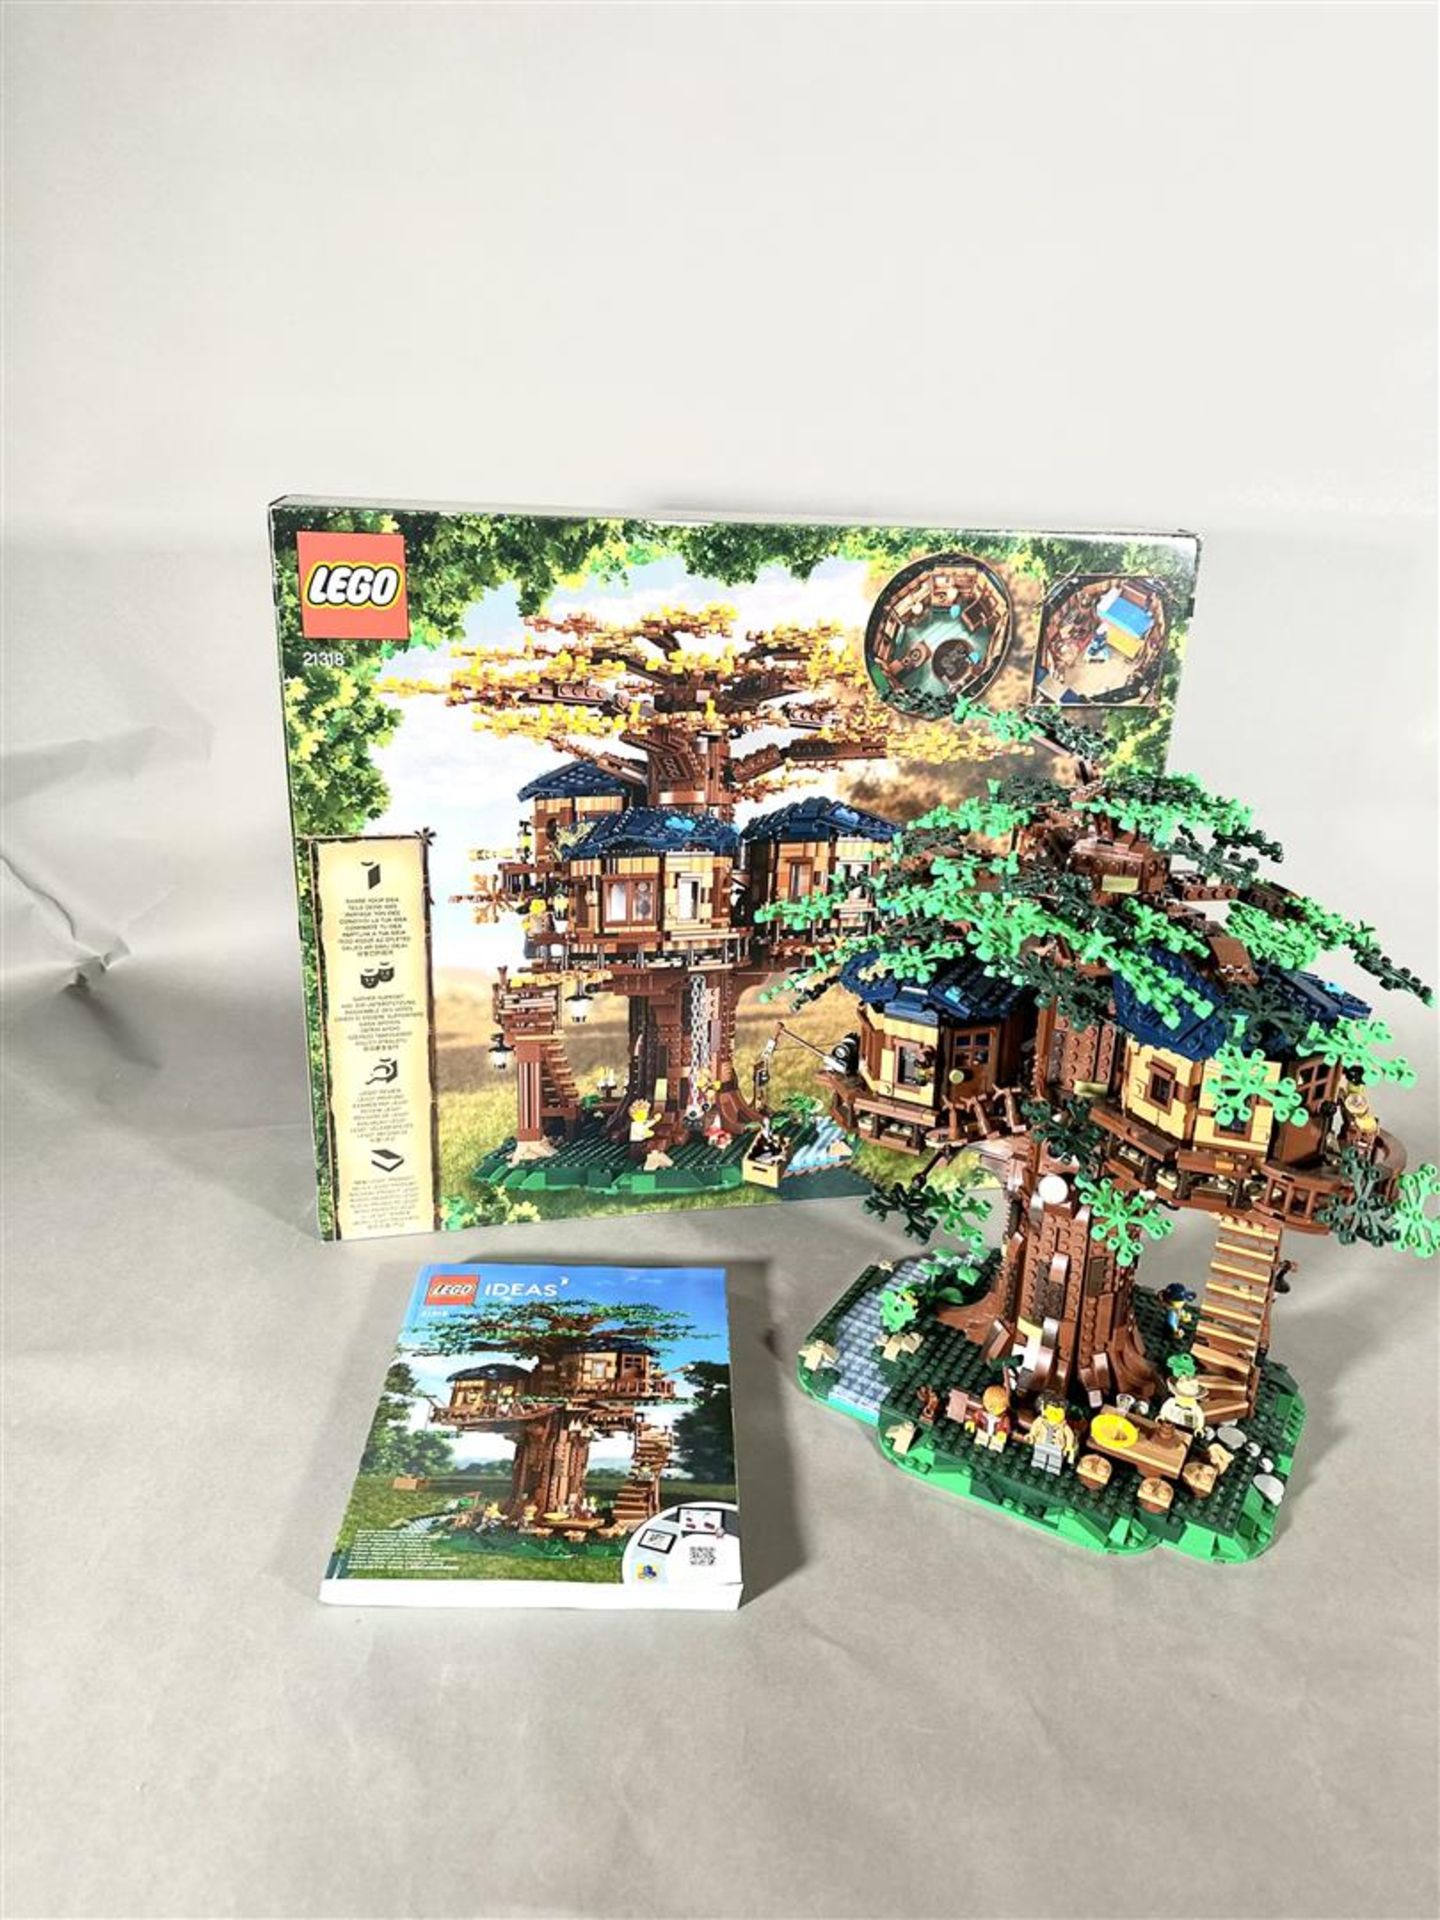 Lego - Ideas - 21318 - Treehouse 21318, 2000 - present.